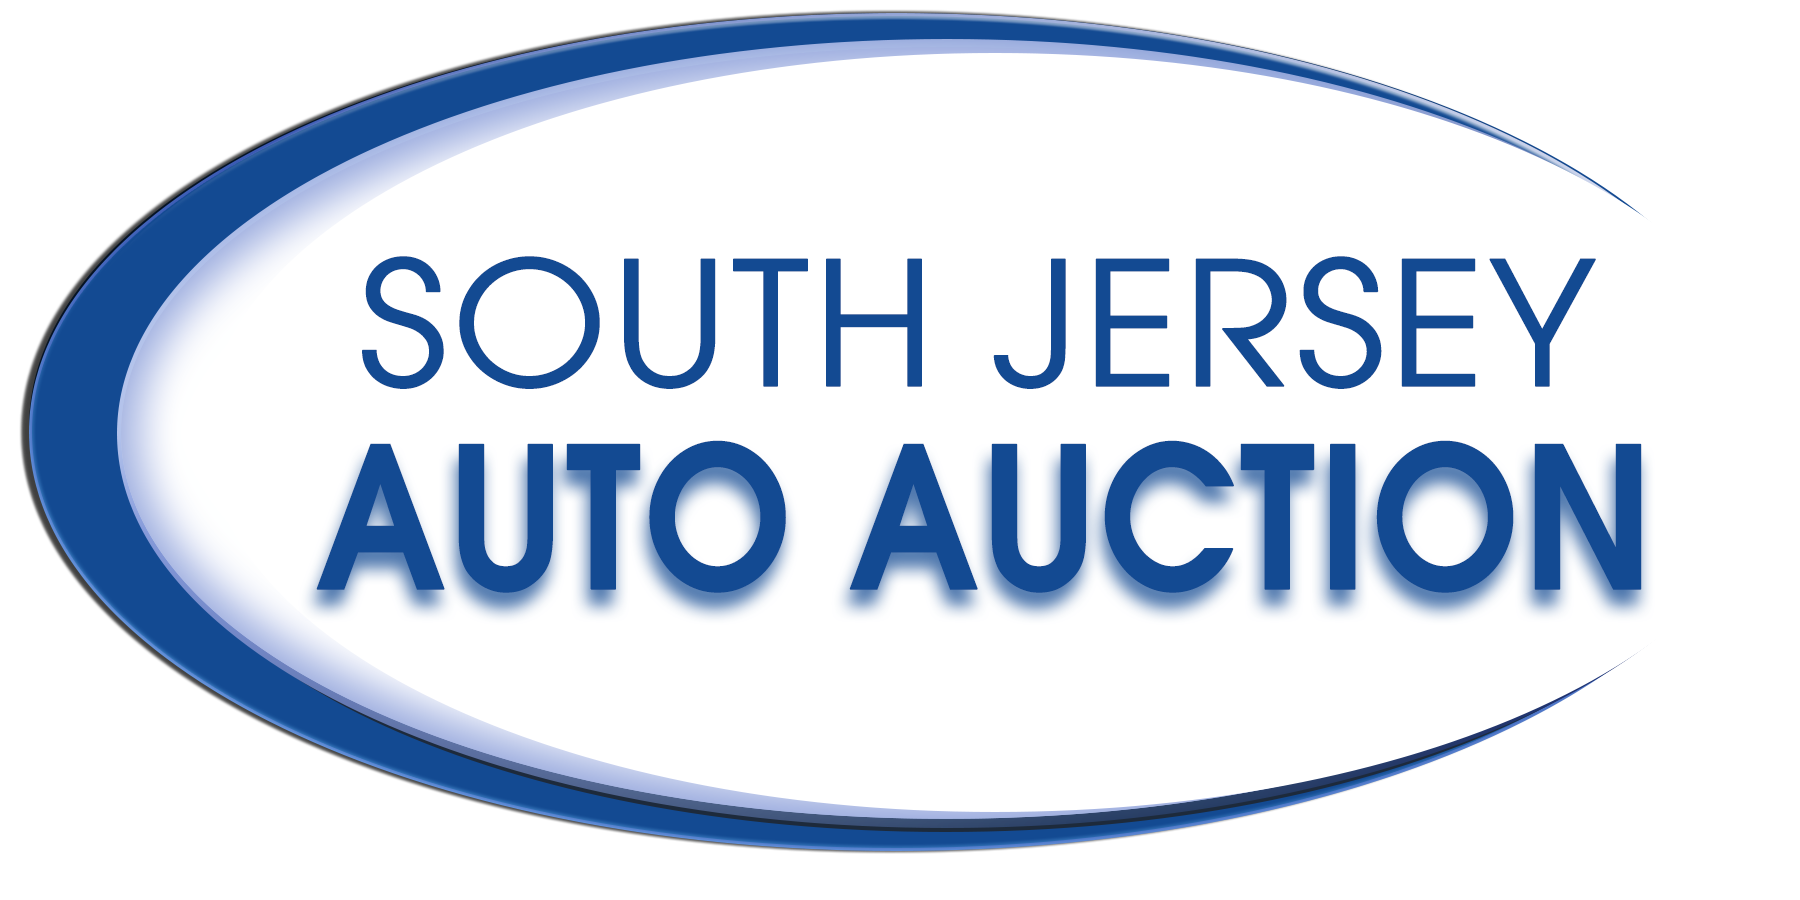 SOUTH JERSEY AUTO AUCTION